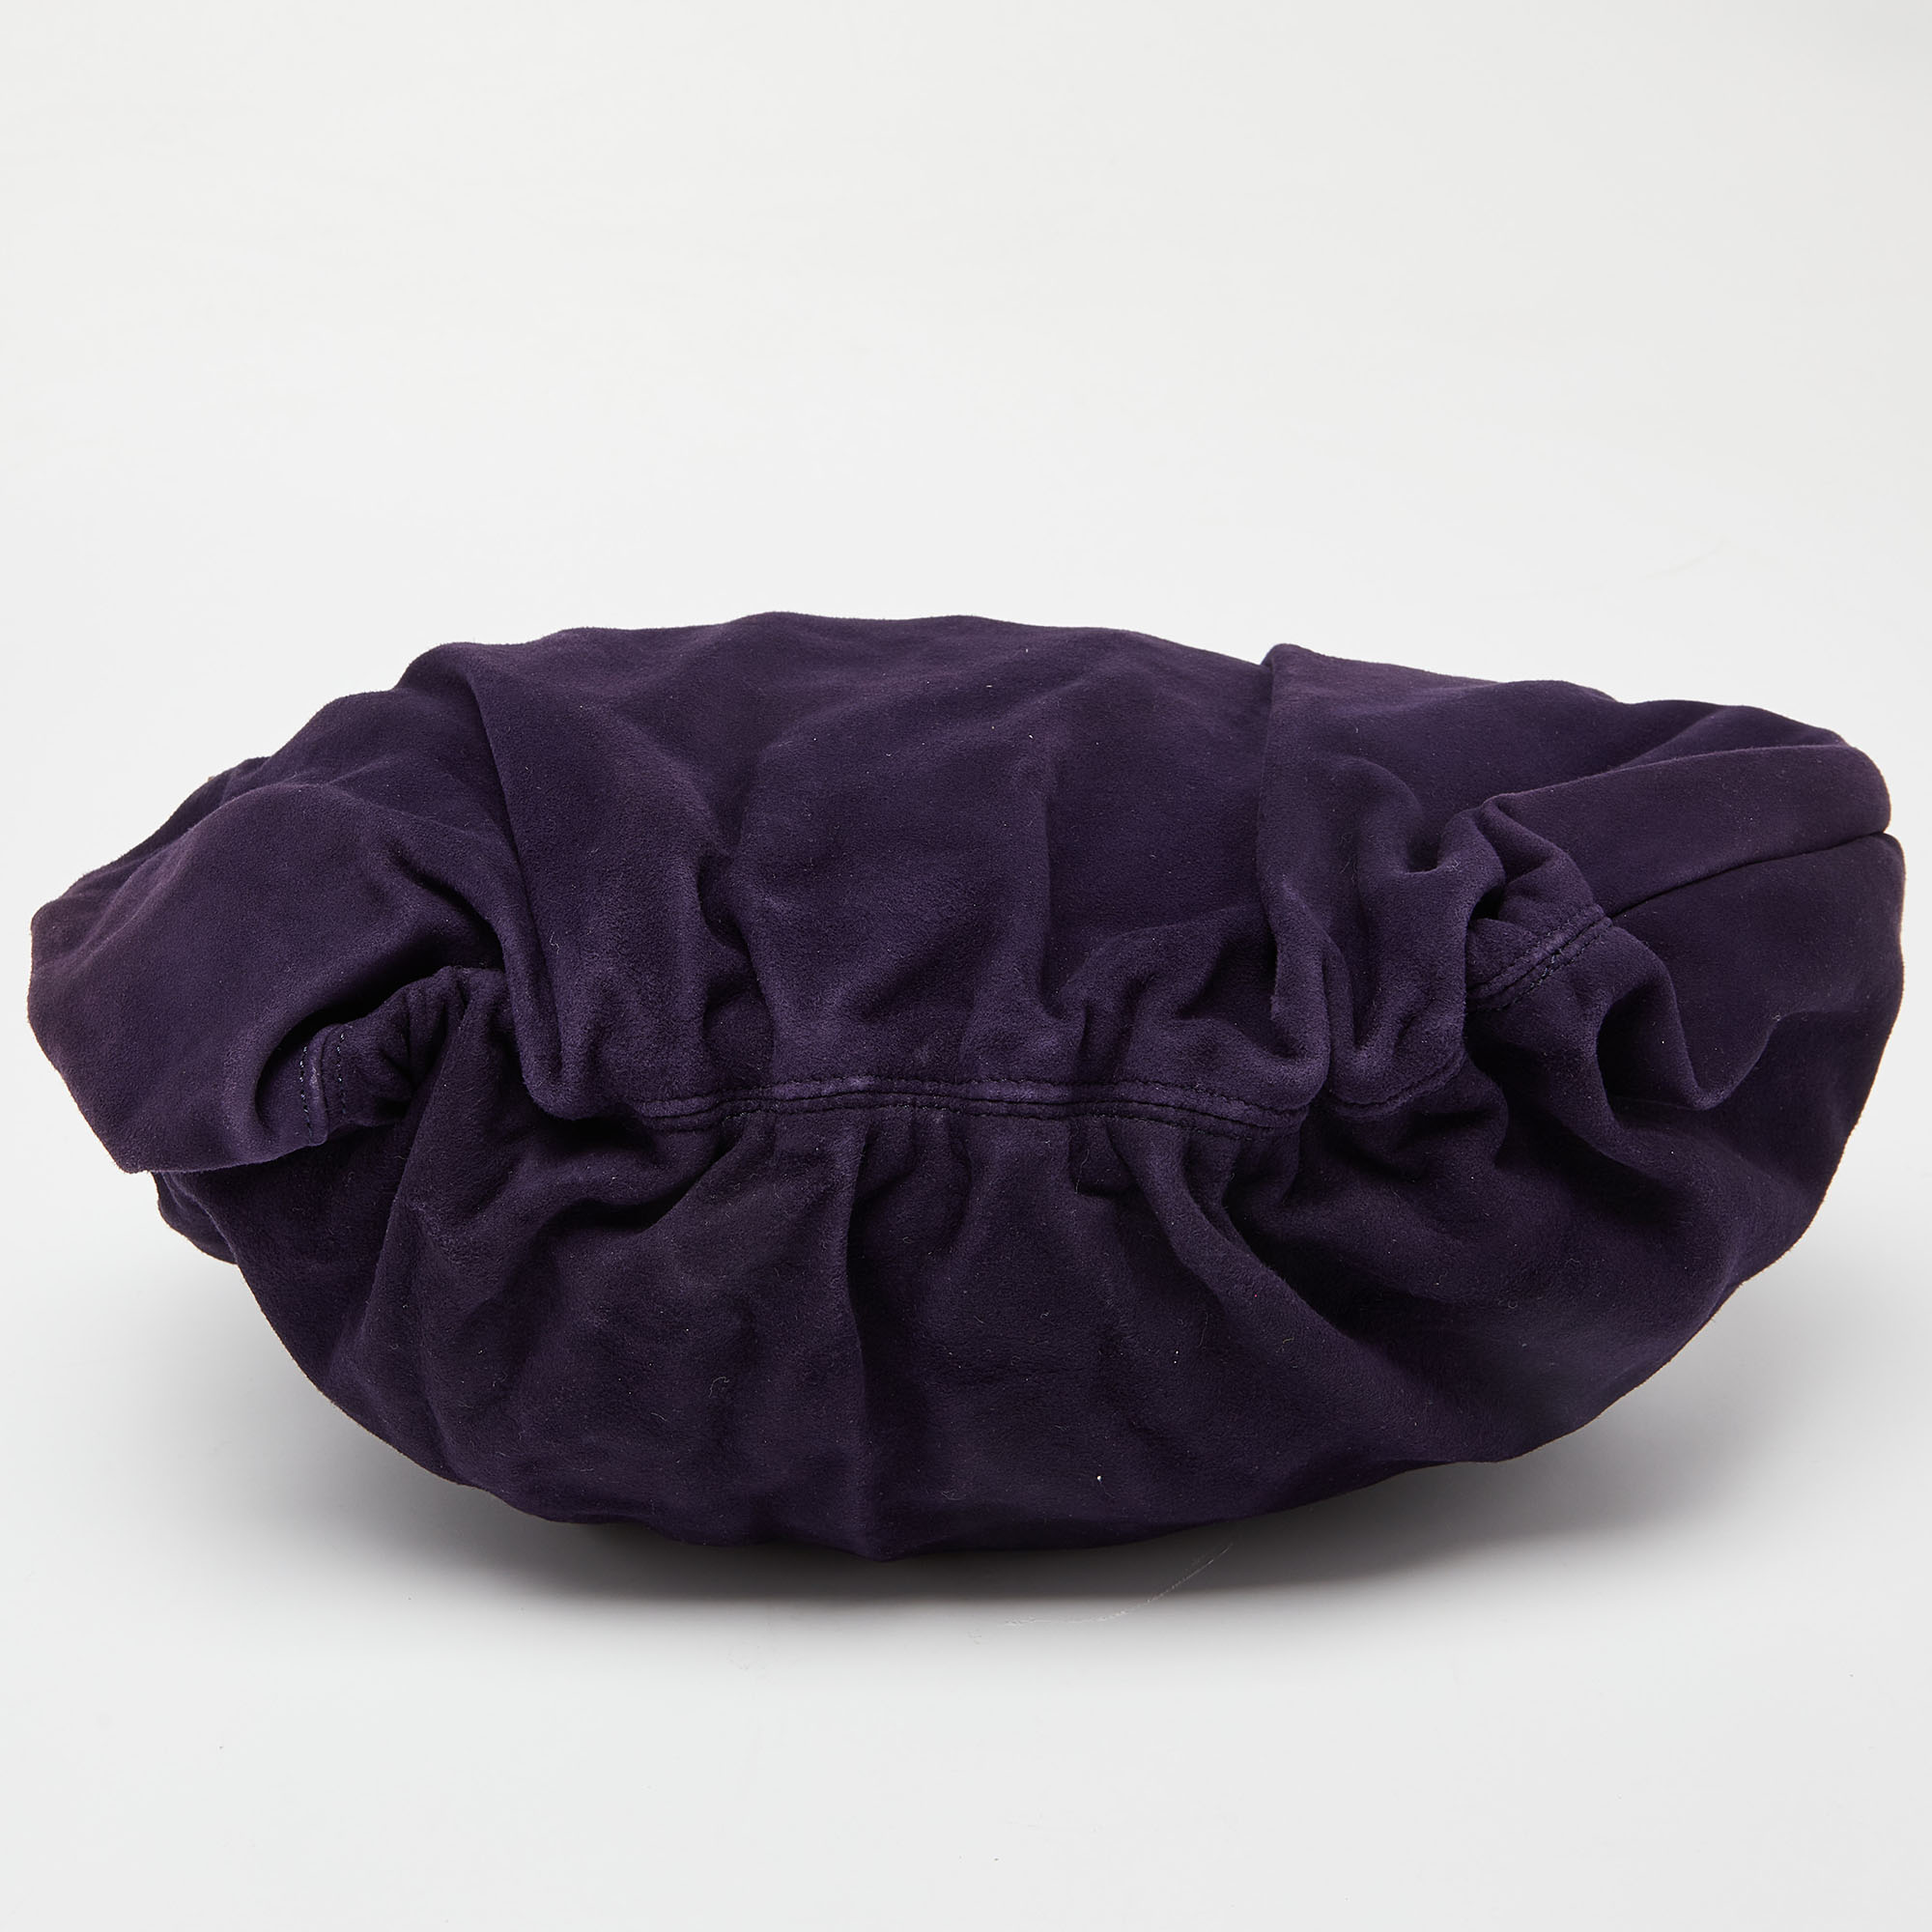 Marni Purple Suede And Leather Frame Shoulder Bag